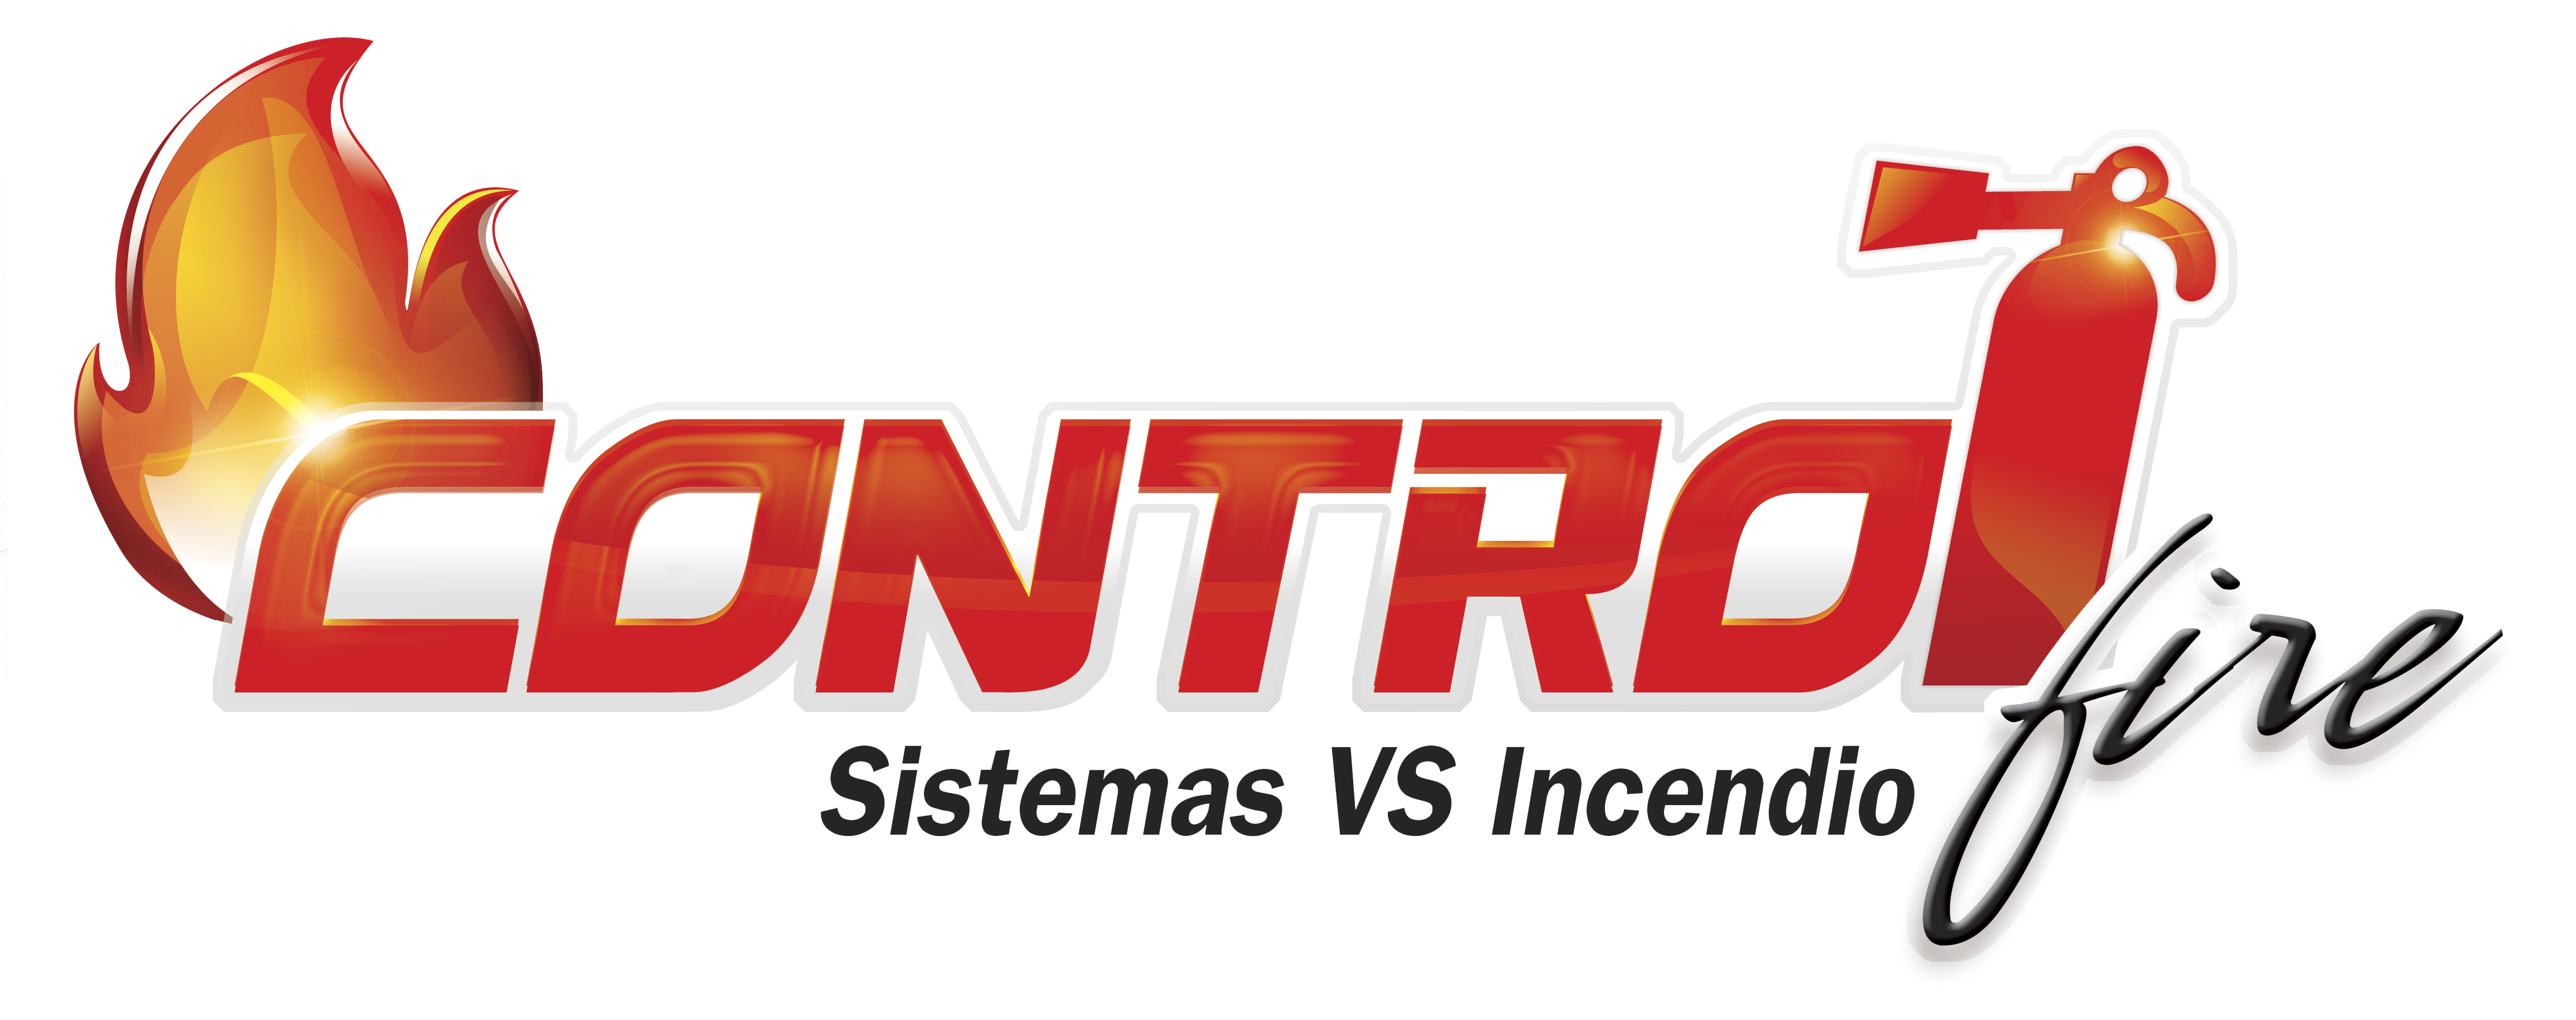 CONTROL FIRE MX SISTEMAS VS. INCENDIO